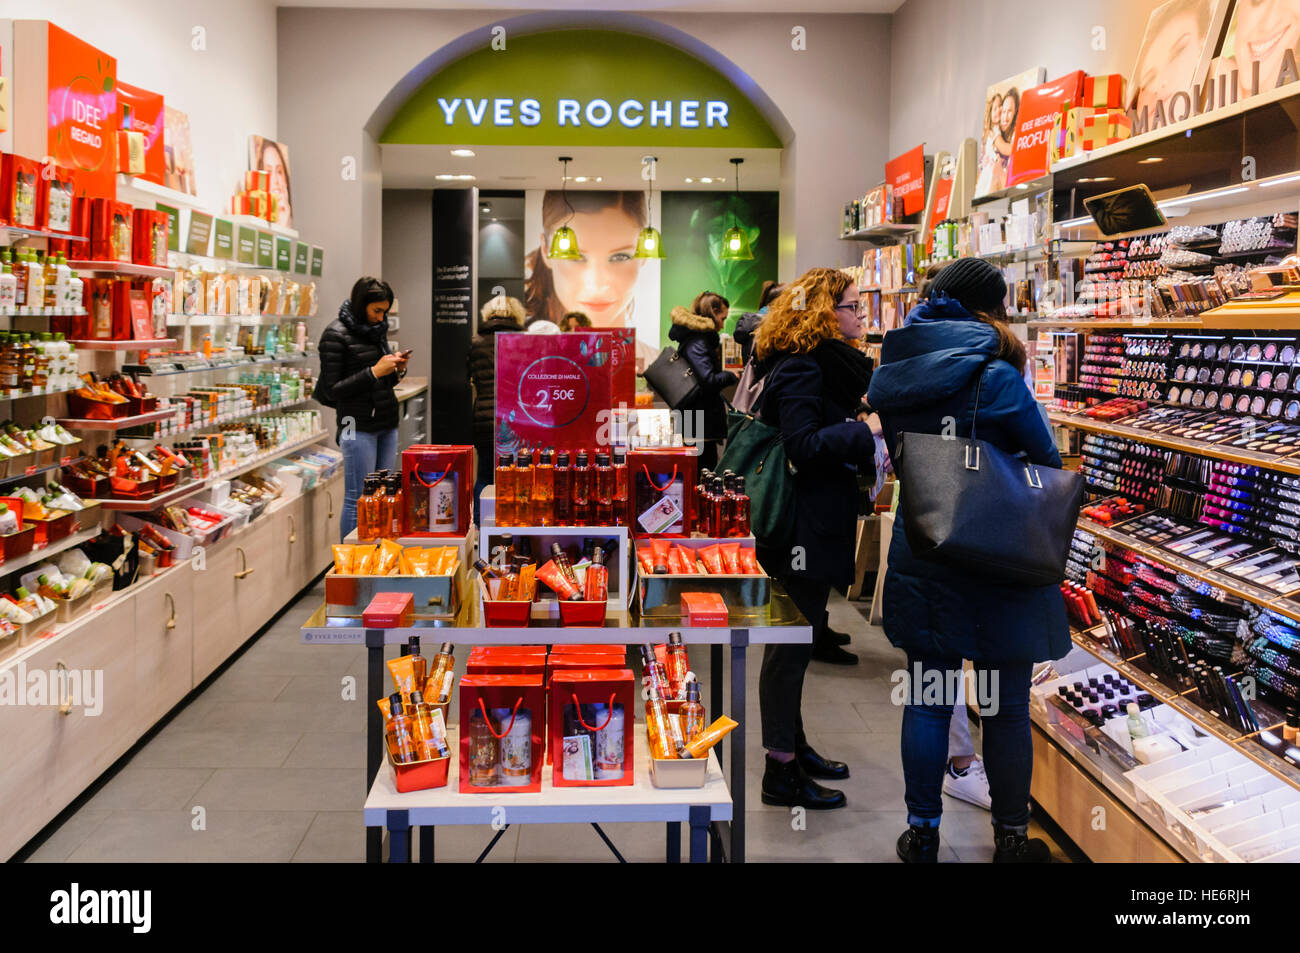 Yves Rocher cosmetics Milan, Stock Photo - Alamy